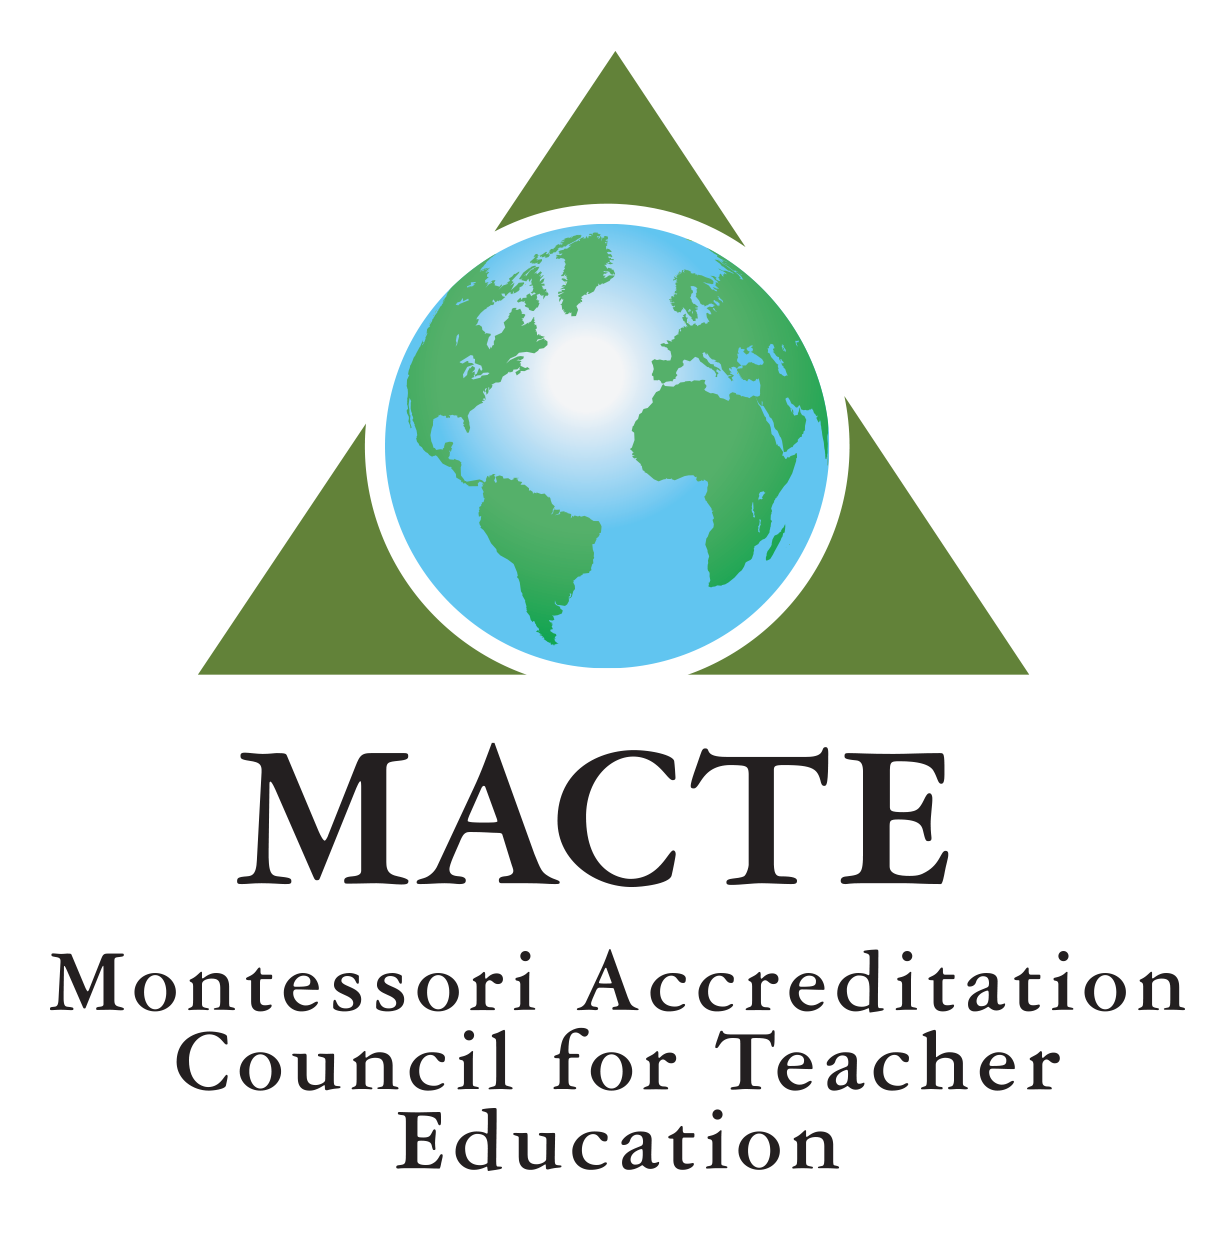 Montessori Accreditation Council for Teacher Education logo